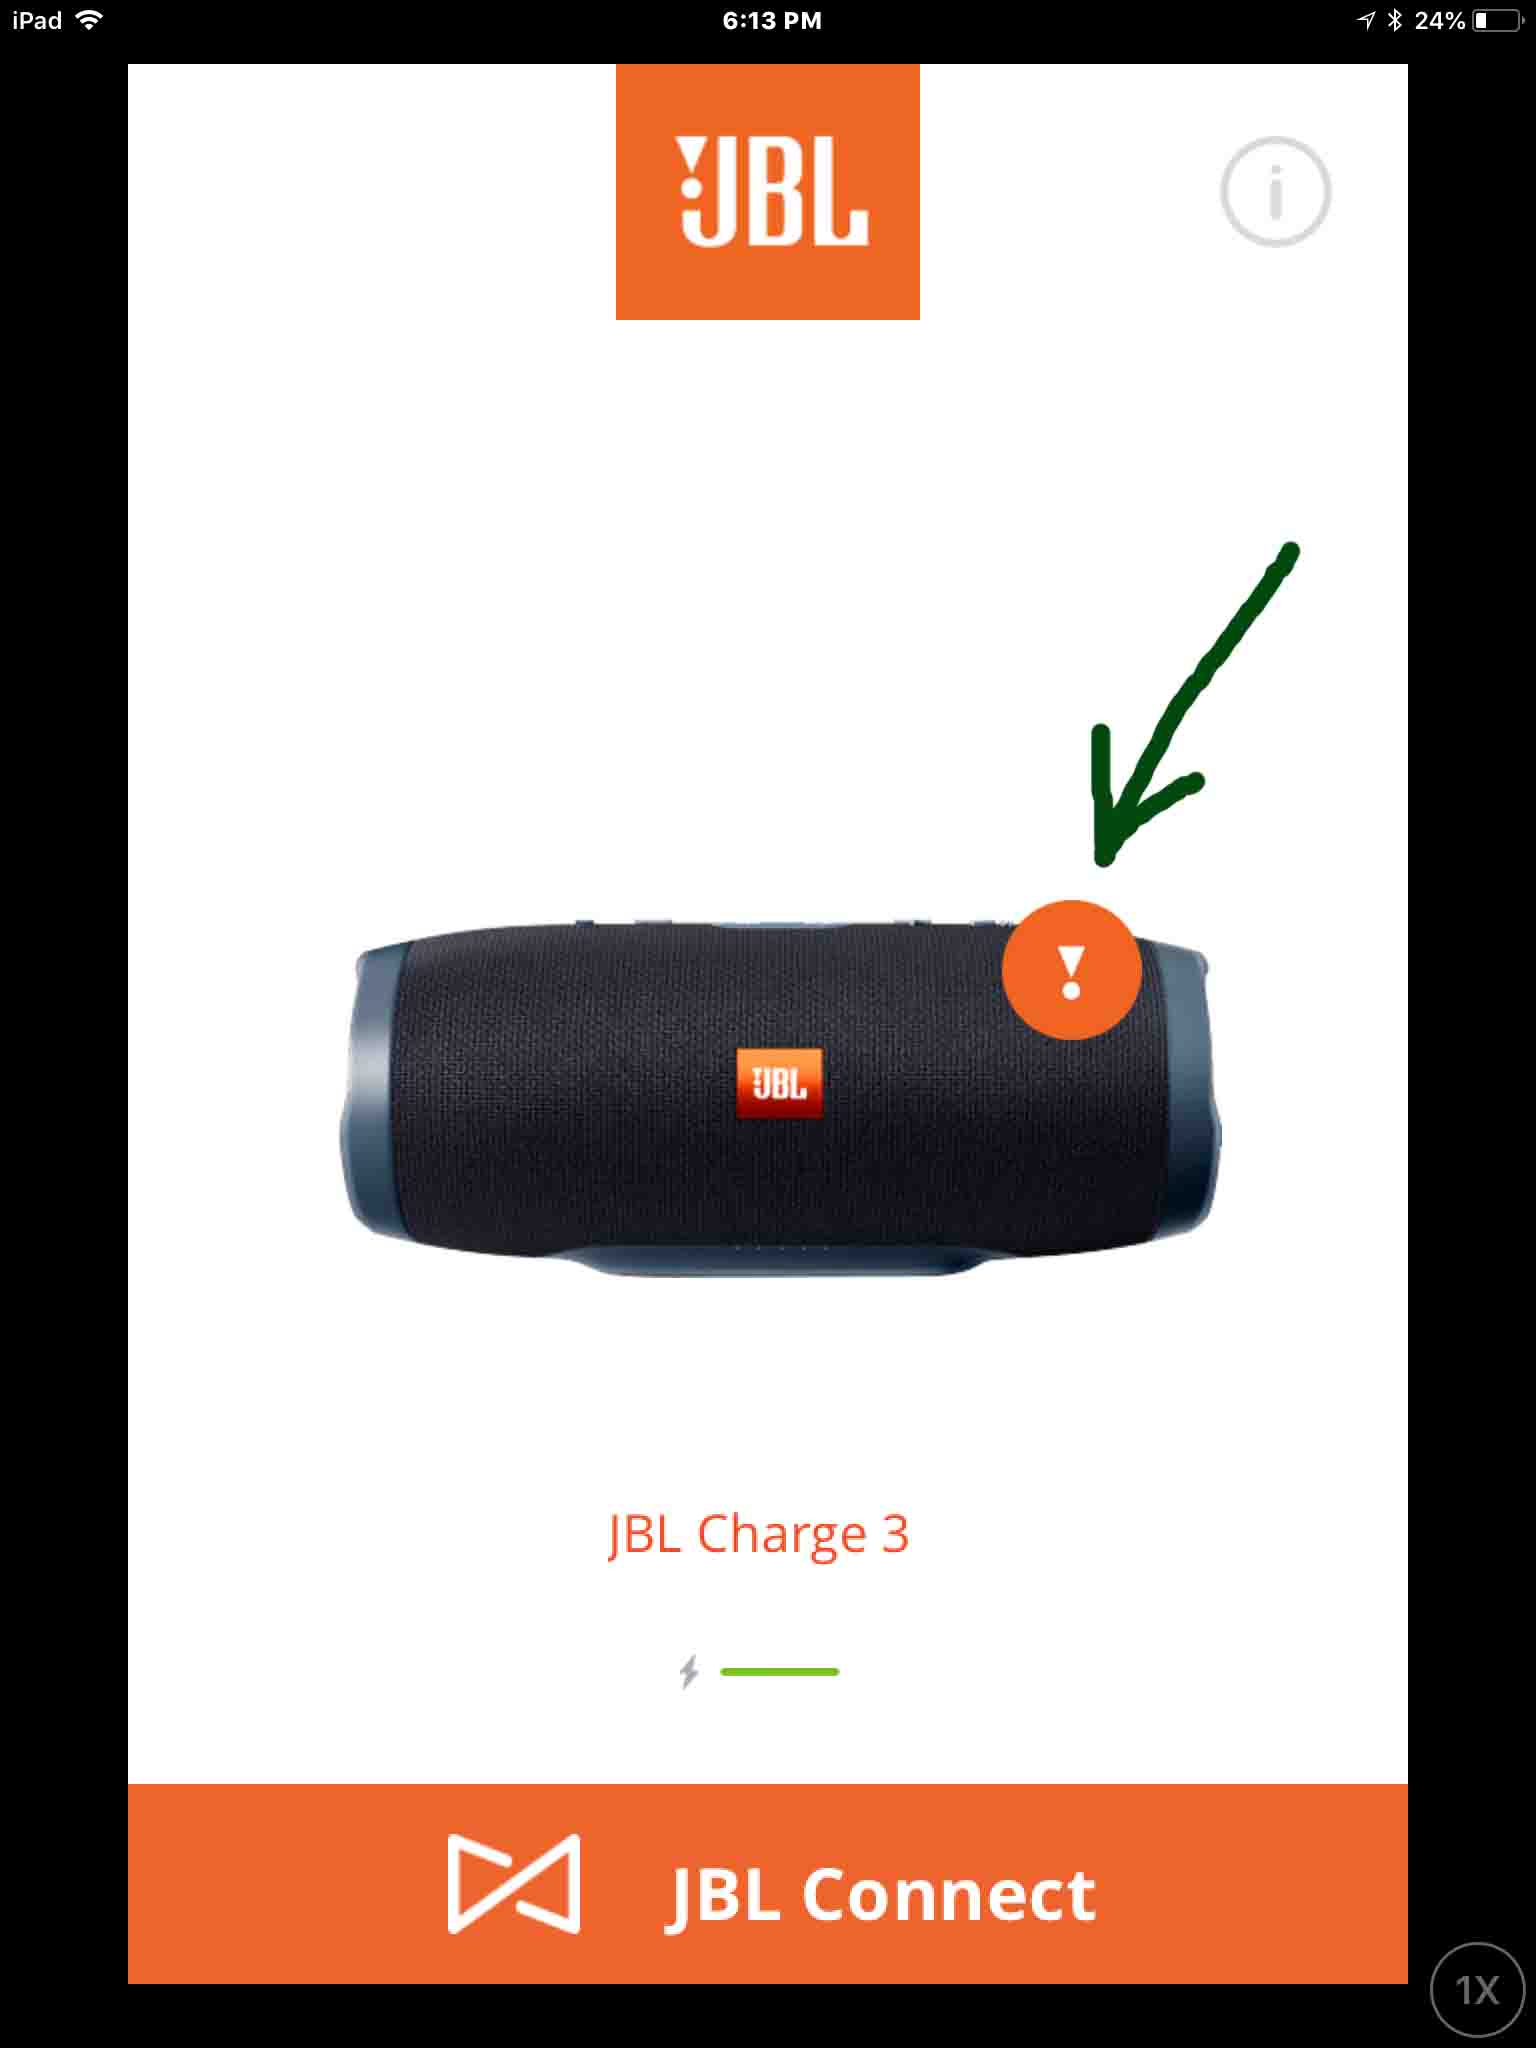 to Run JBL Charge Firmware Check - Tom's Tek